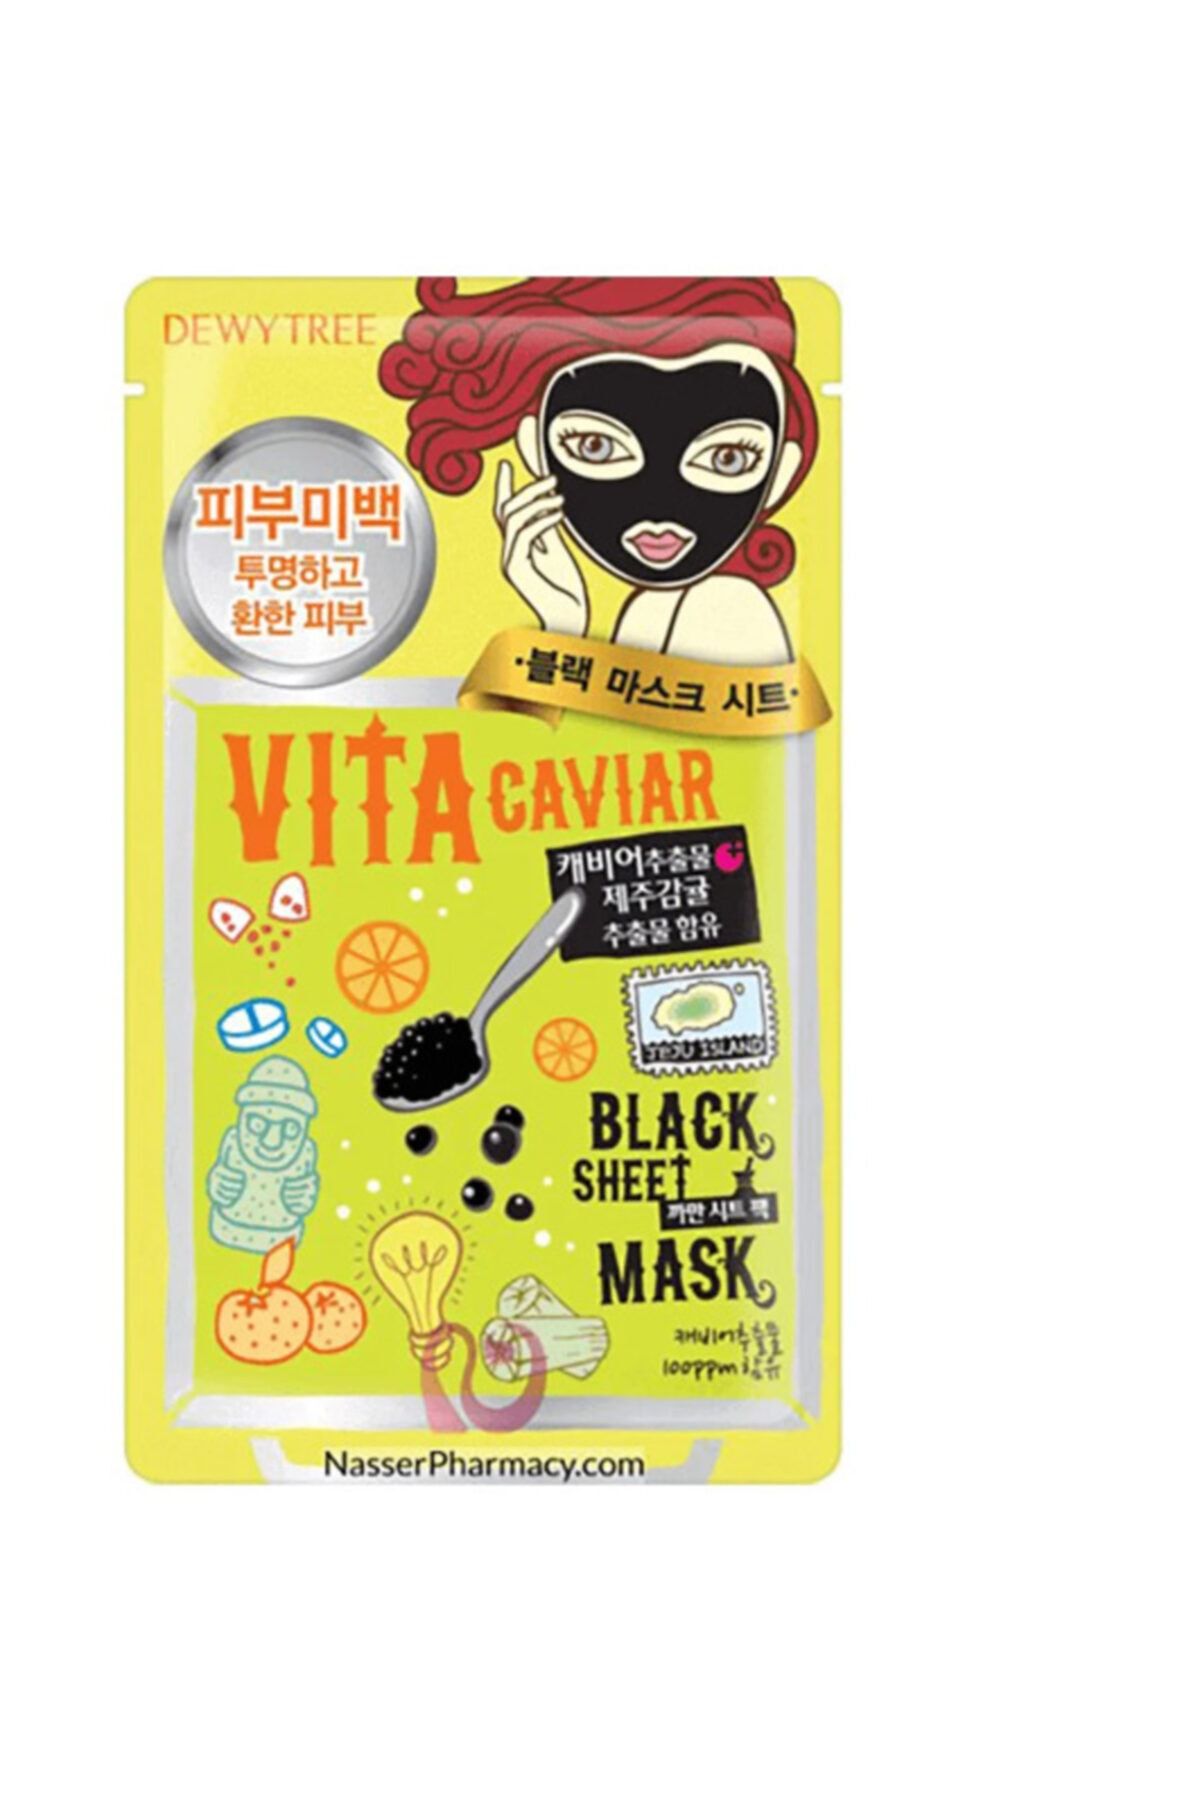 DEWYTREE Vita Caviar Black Maske